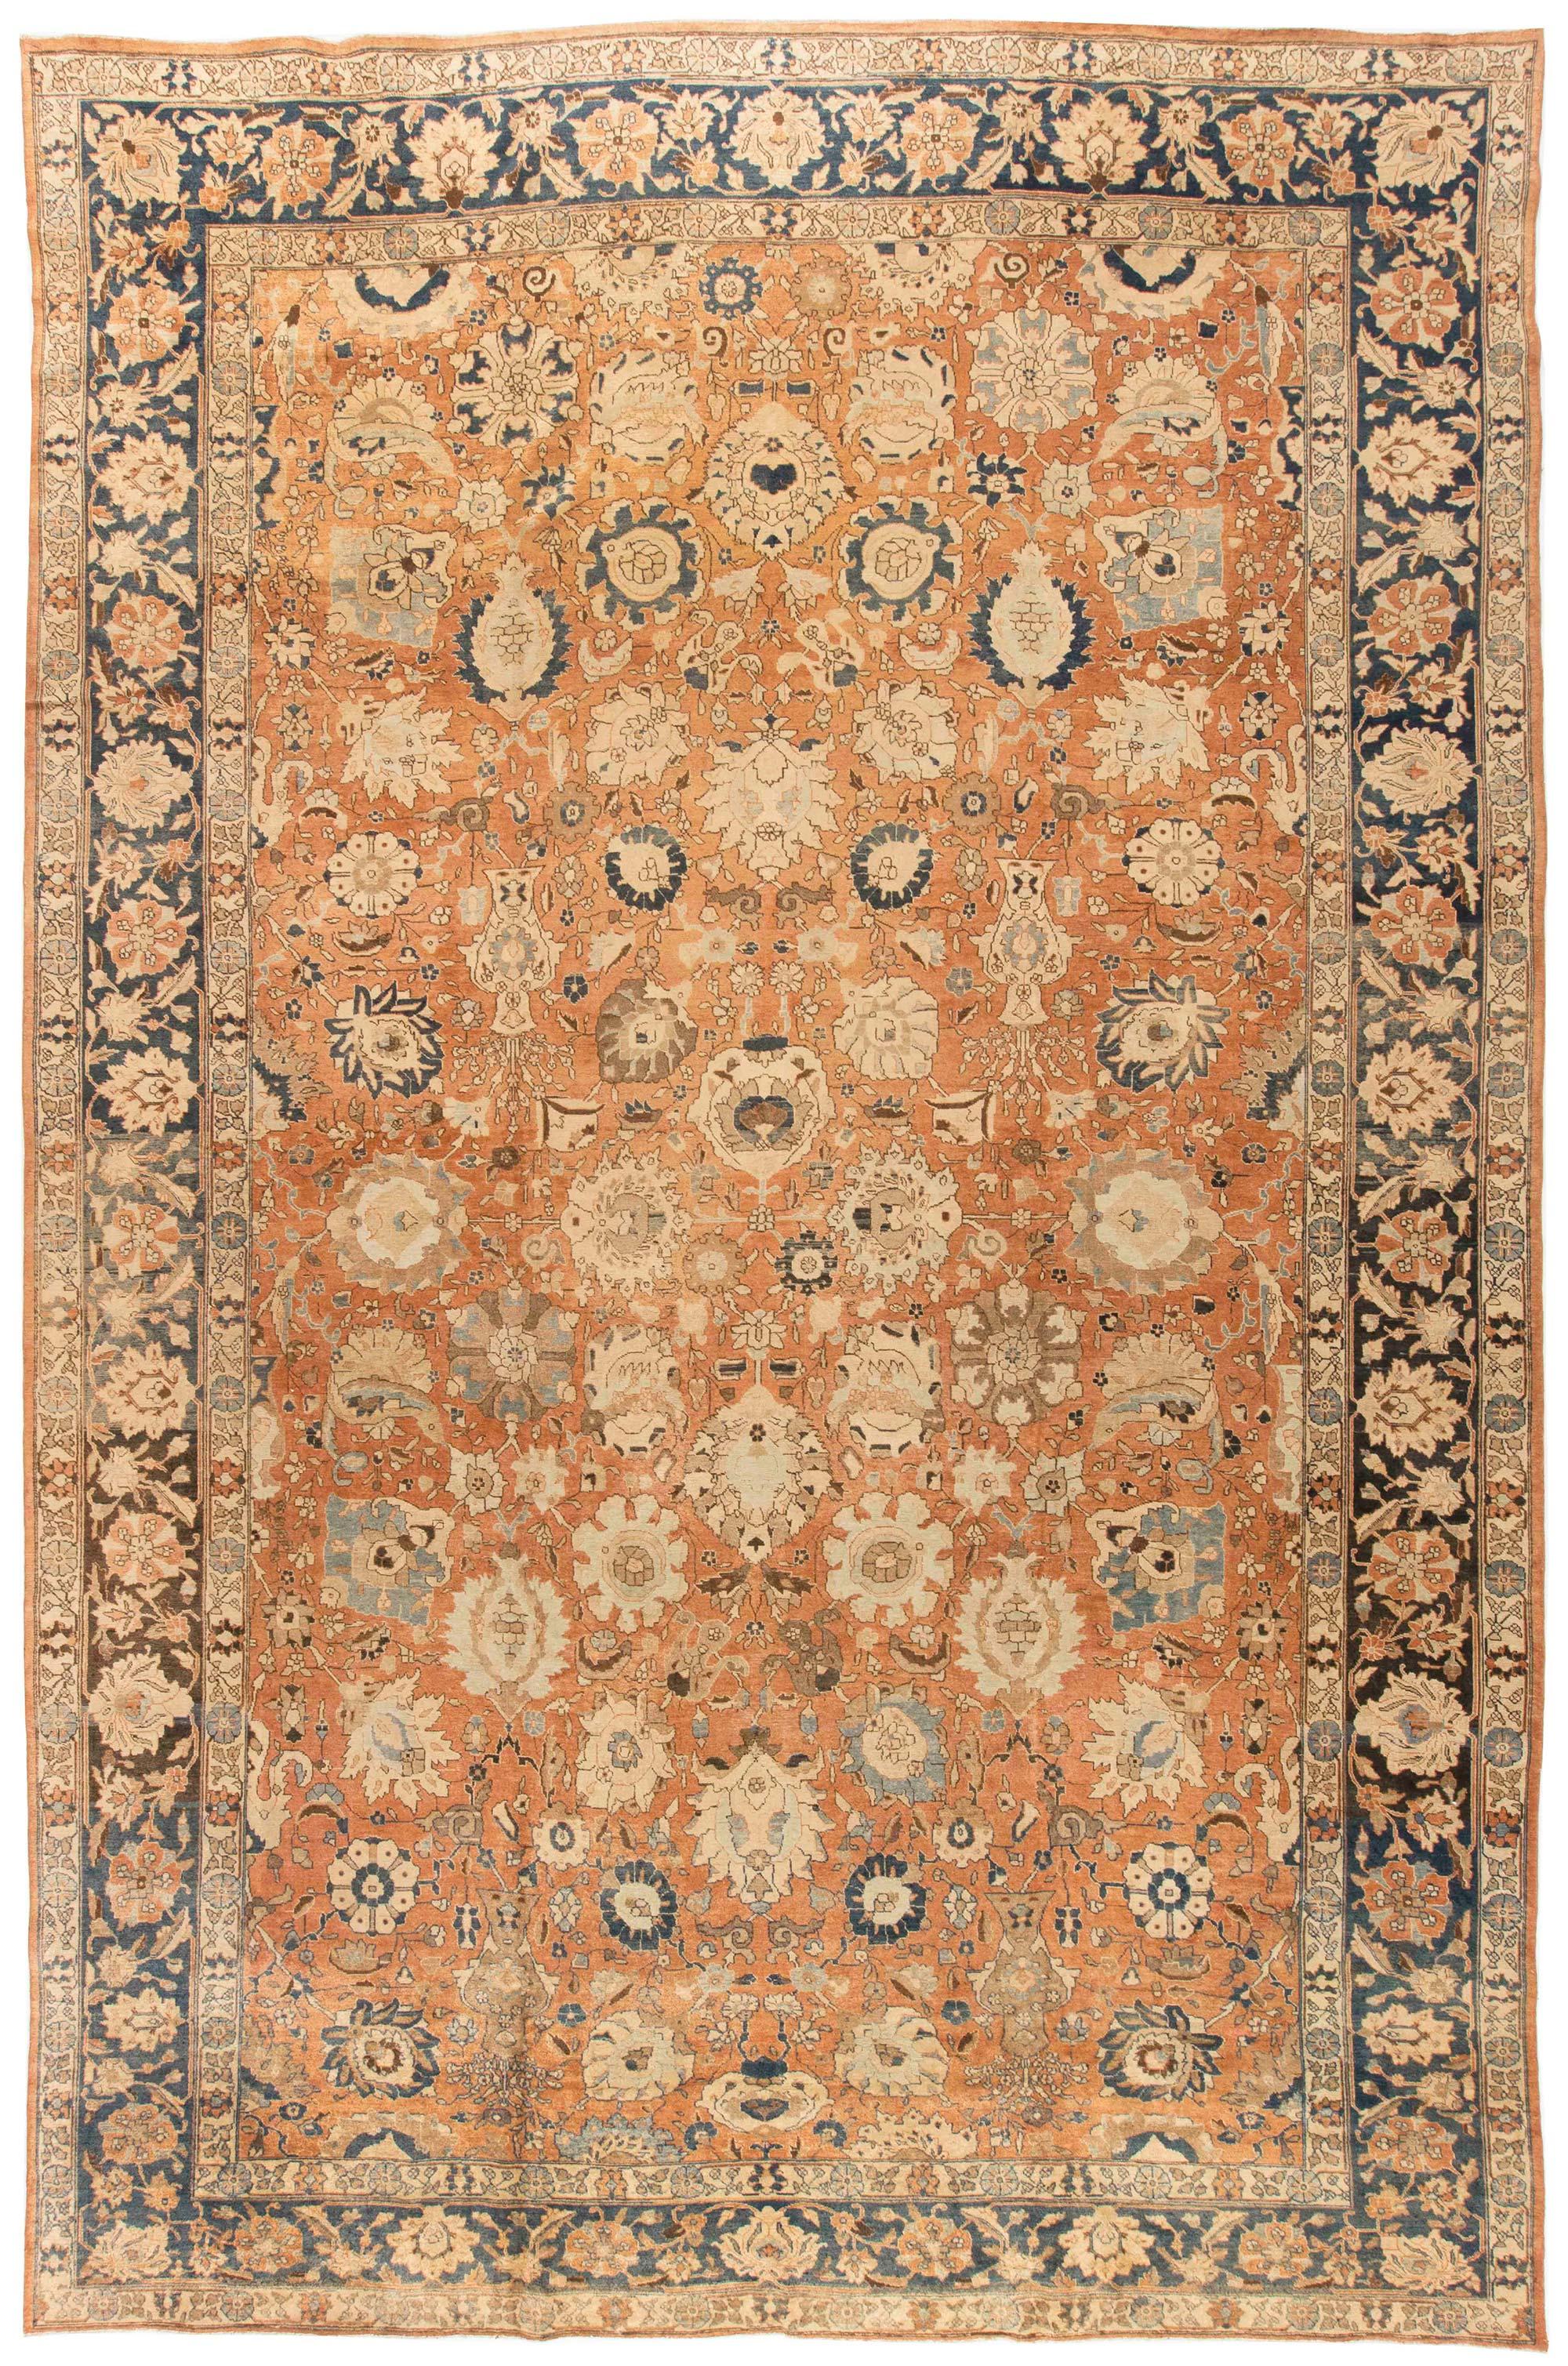 Antique Persian Tabriz Botanic Handmade Wool Rug by Doris Leslie Blau